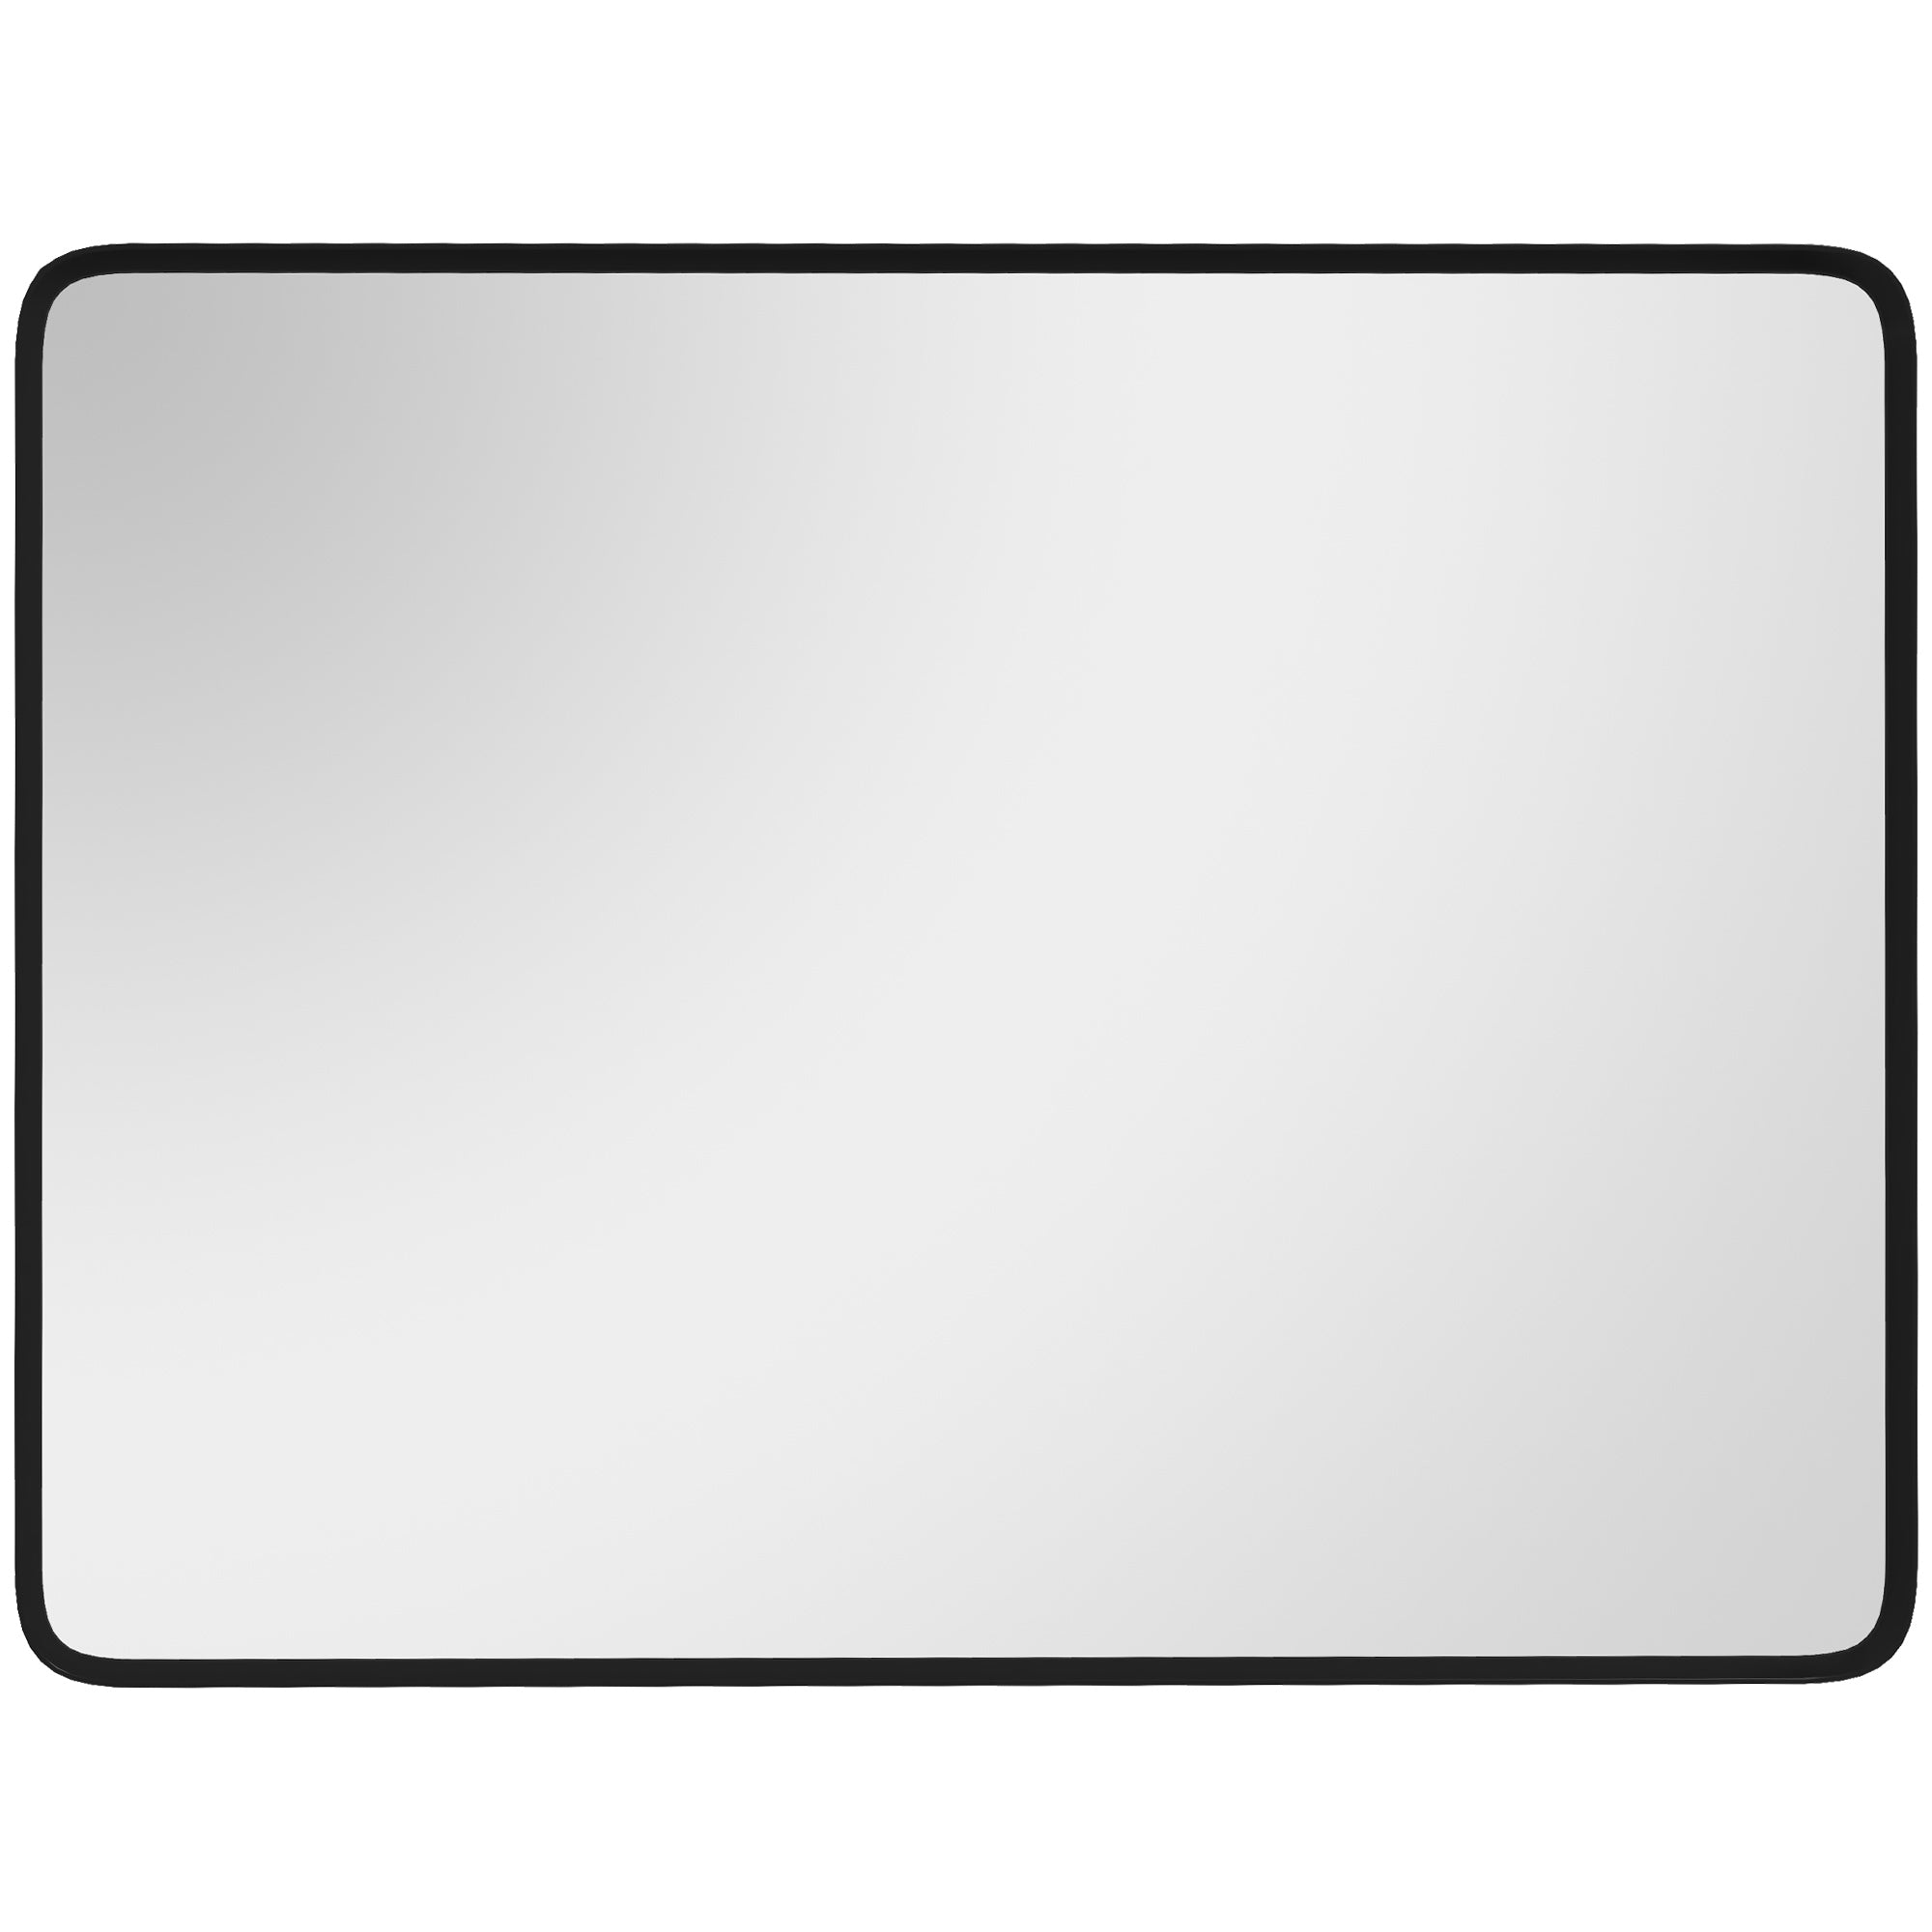 36 x 24 Inch Wall Mirror, Aluminum Frame Rectangular black-mdf